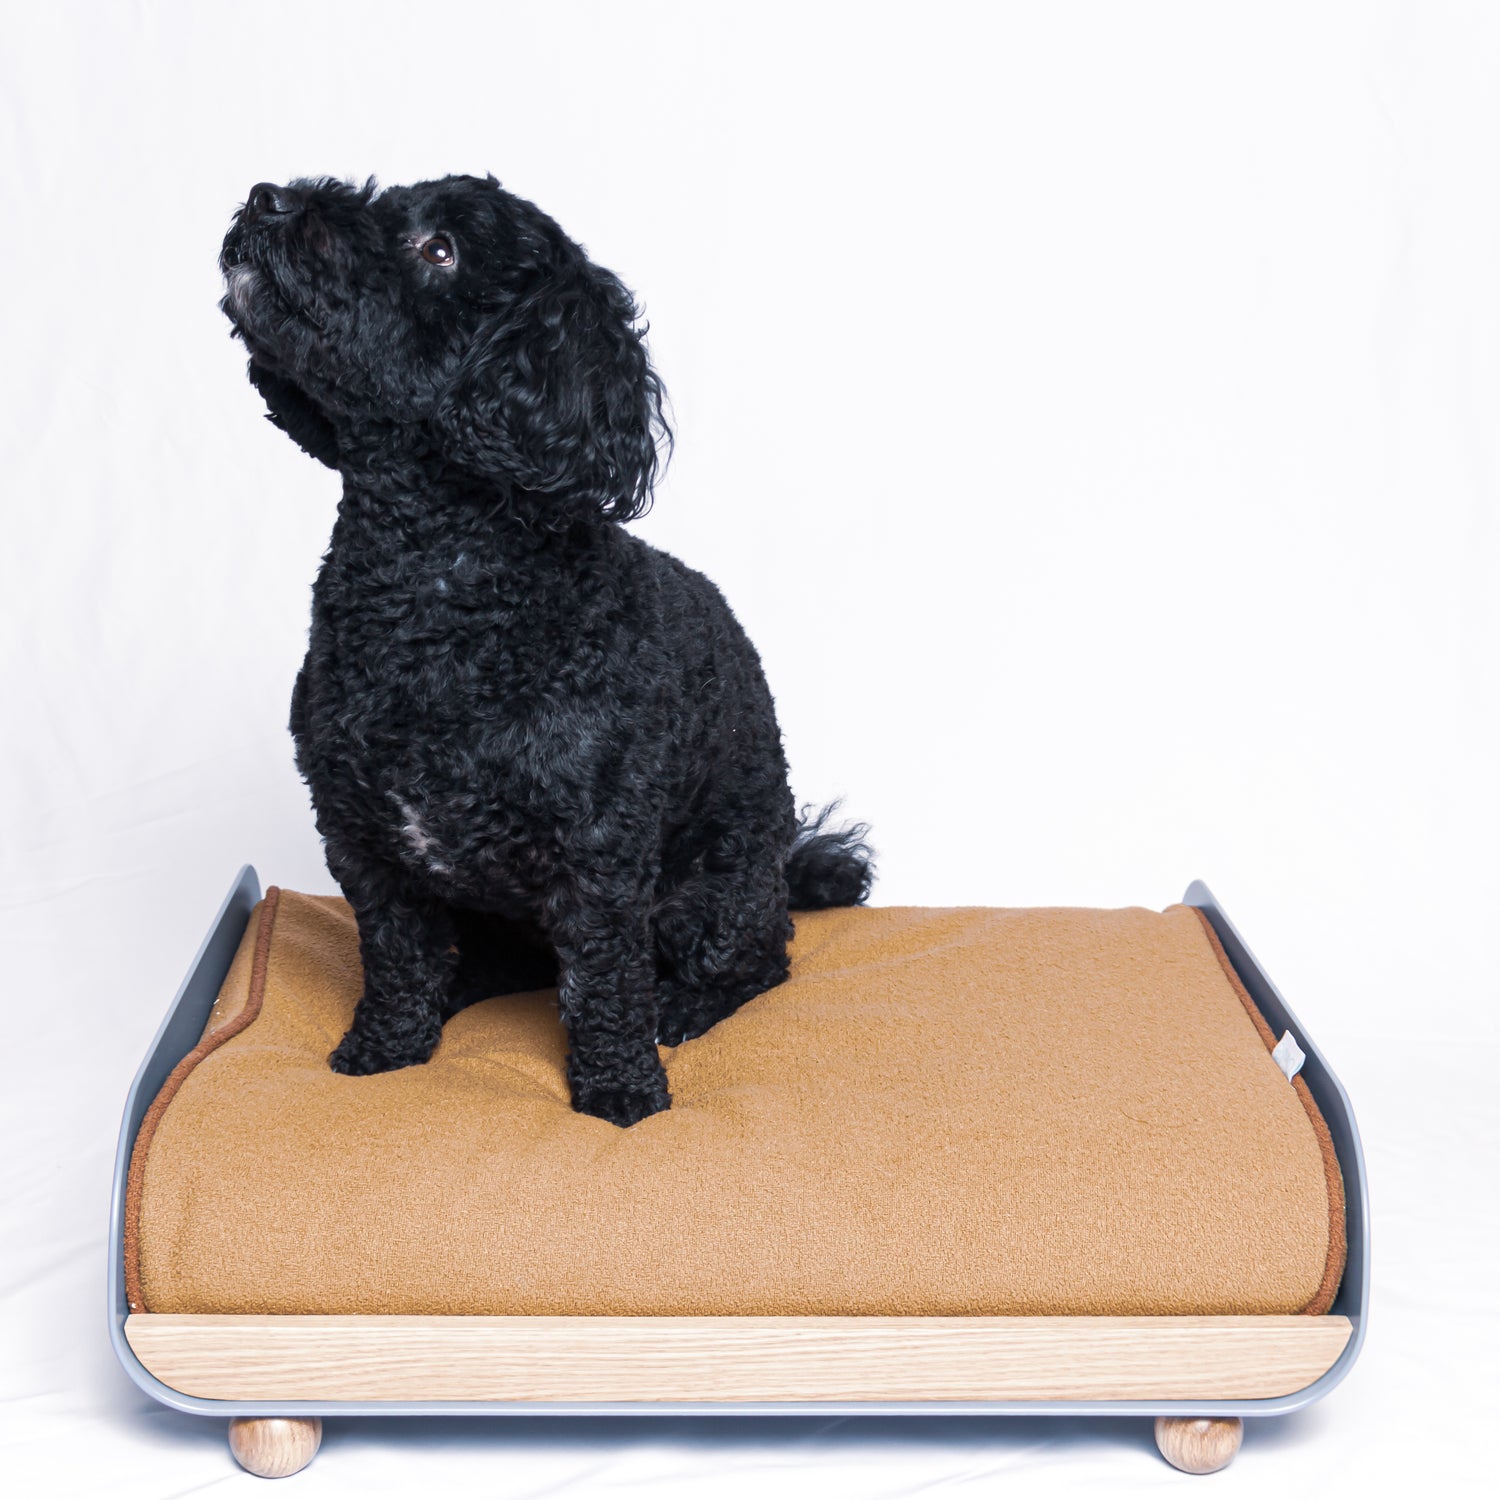 Pamo dog bed size small blue American Oak Black Cavoodle dog model